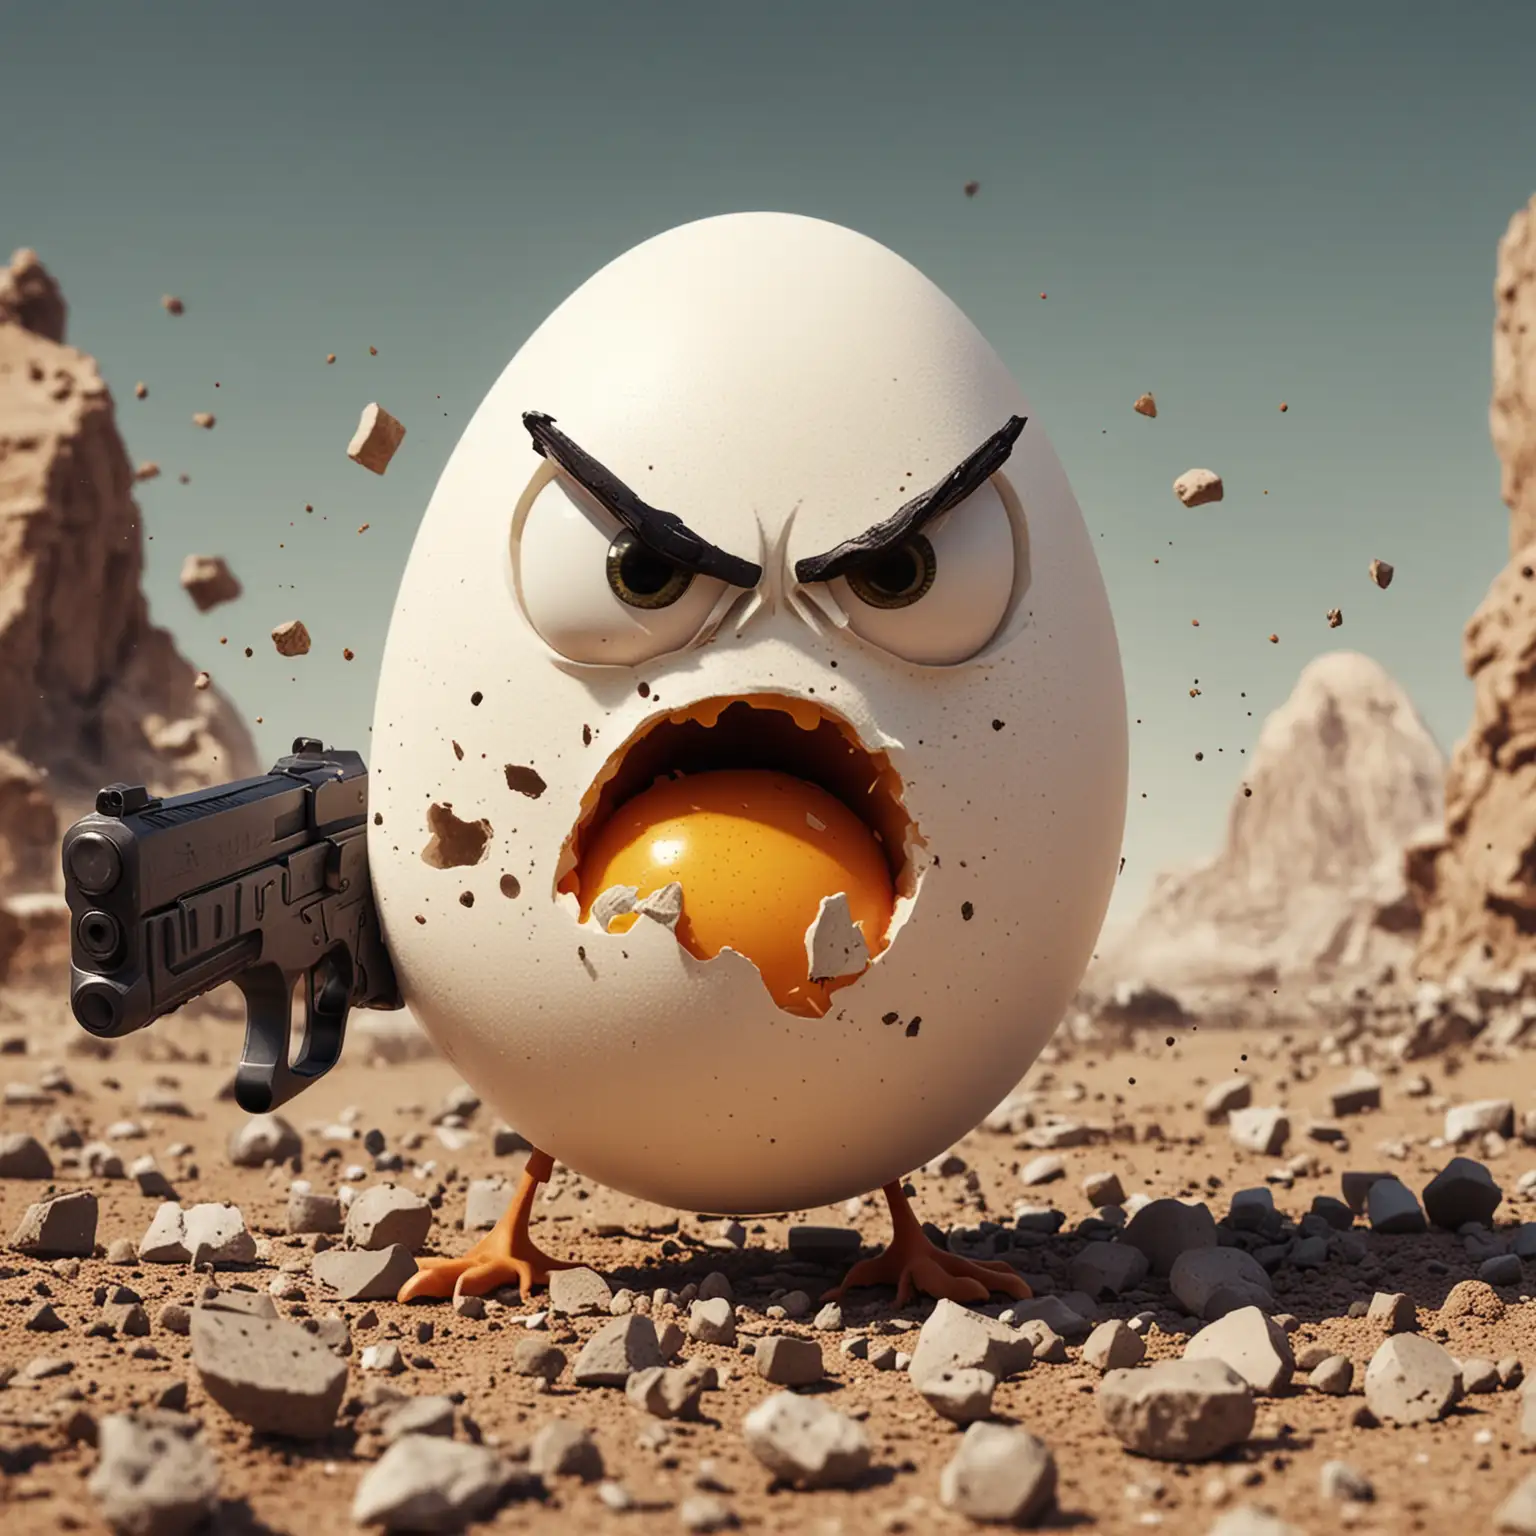 a furious cartoon egg is destroying the world with guns